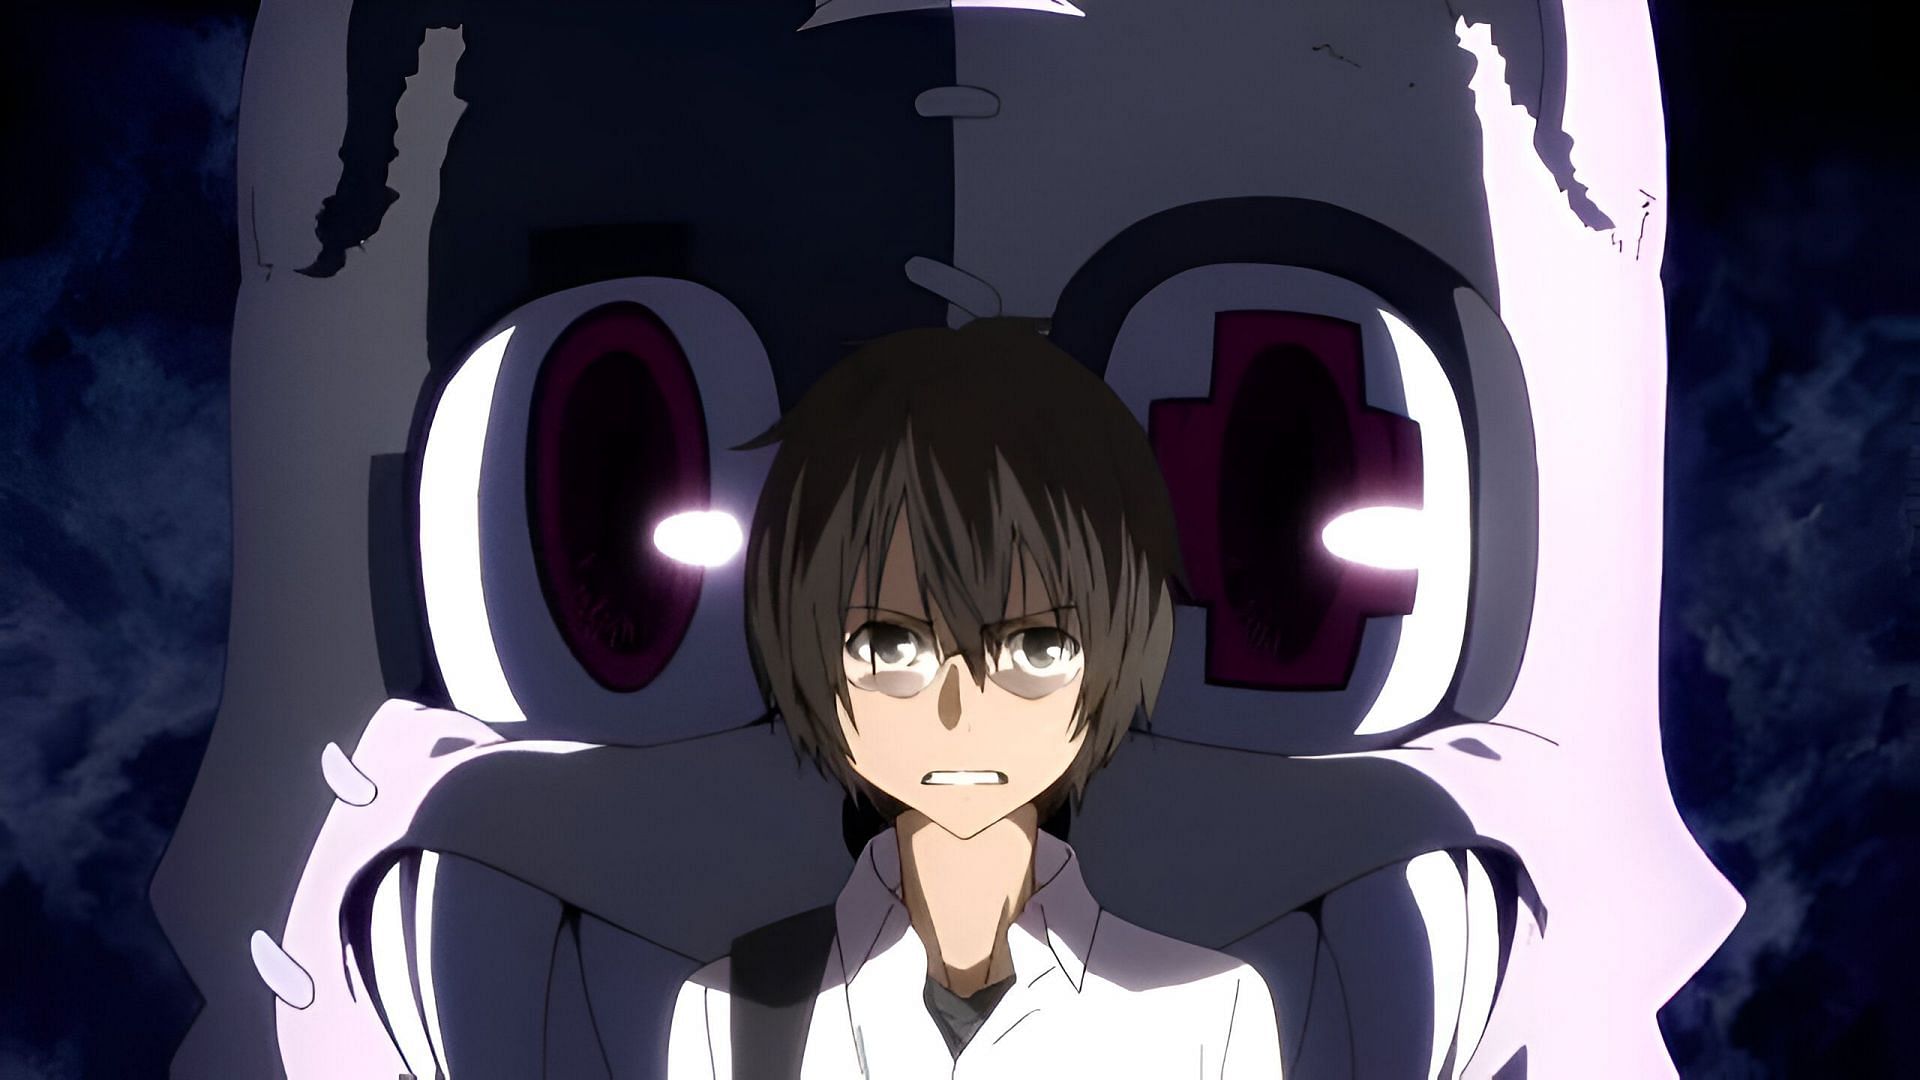 Shuuichi Kagaya as seen in the anime (Image via Pine Jam)